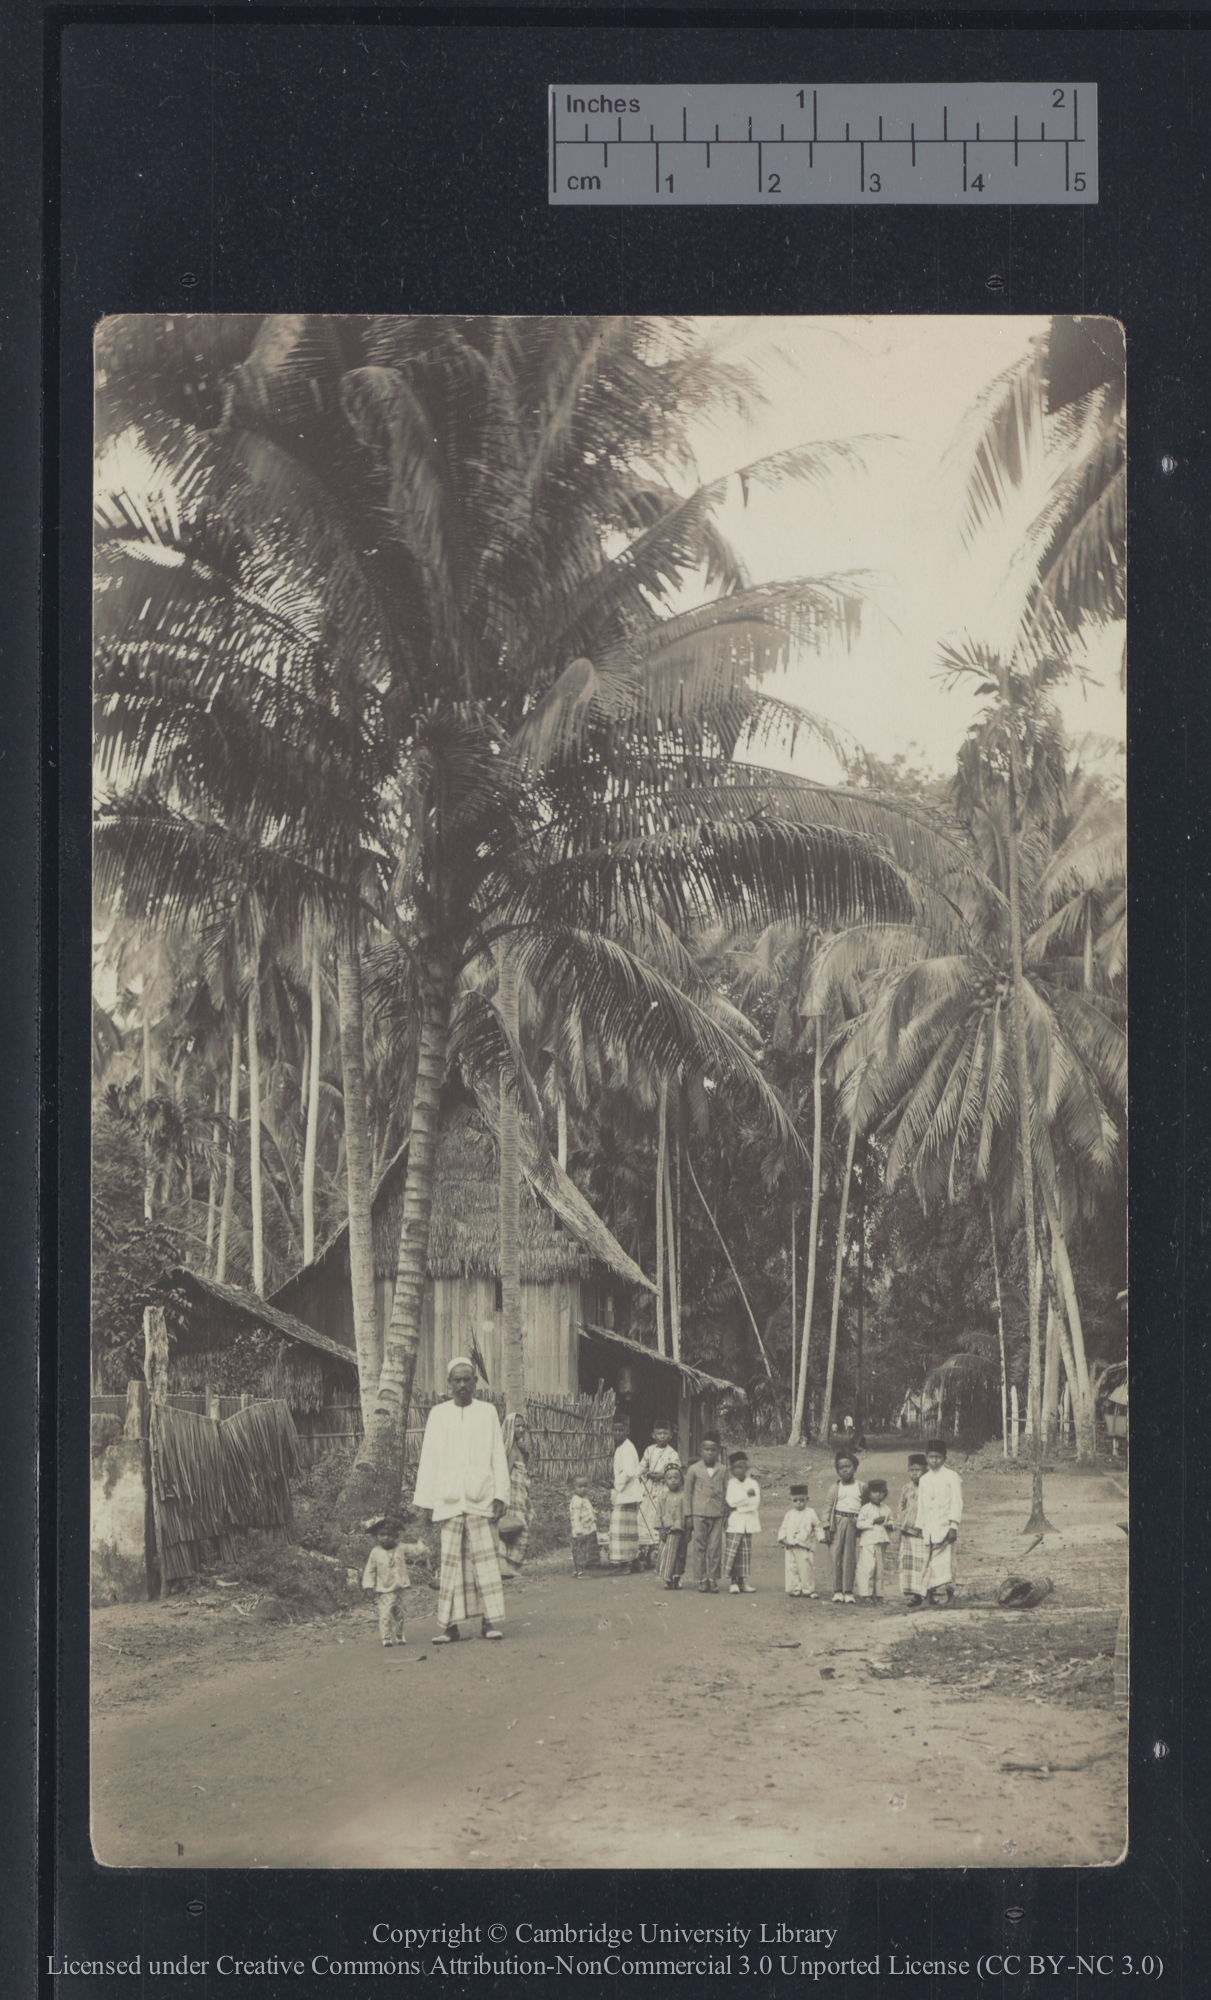 Possibly near Changi, Singapore, 1920 - 1929